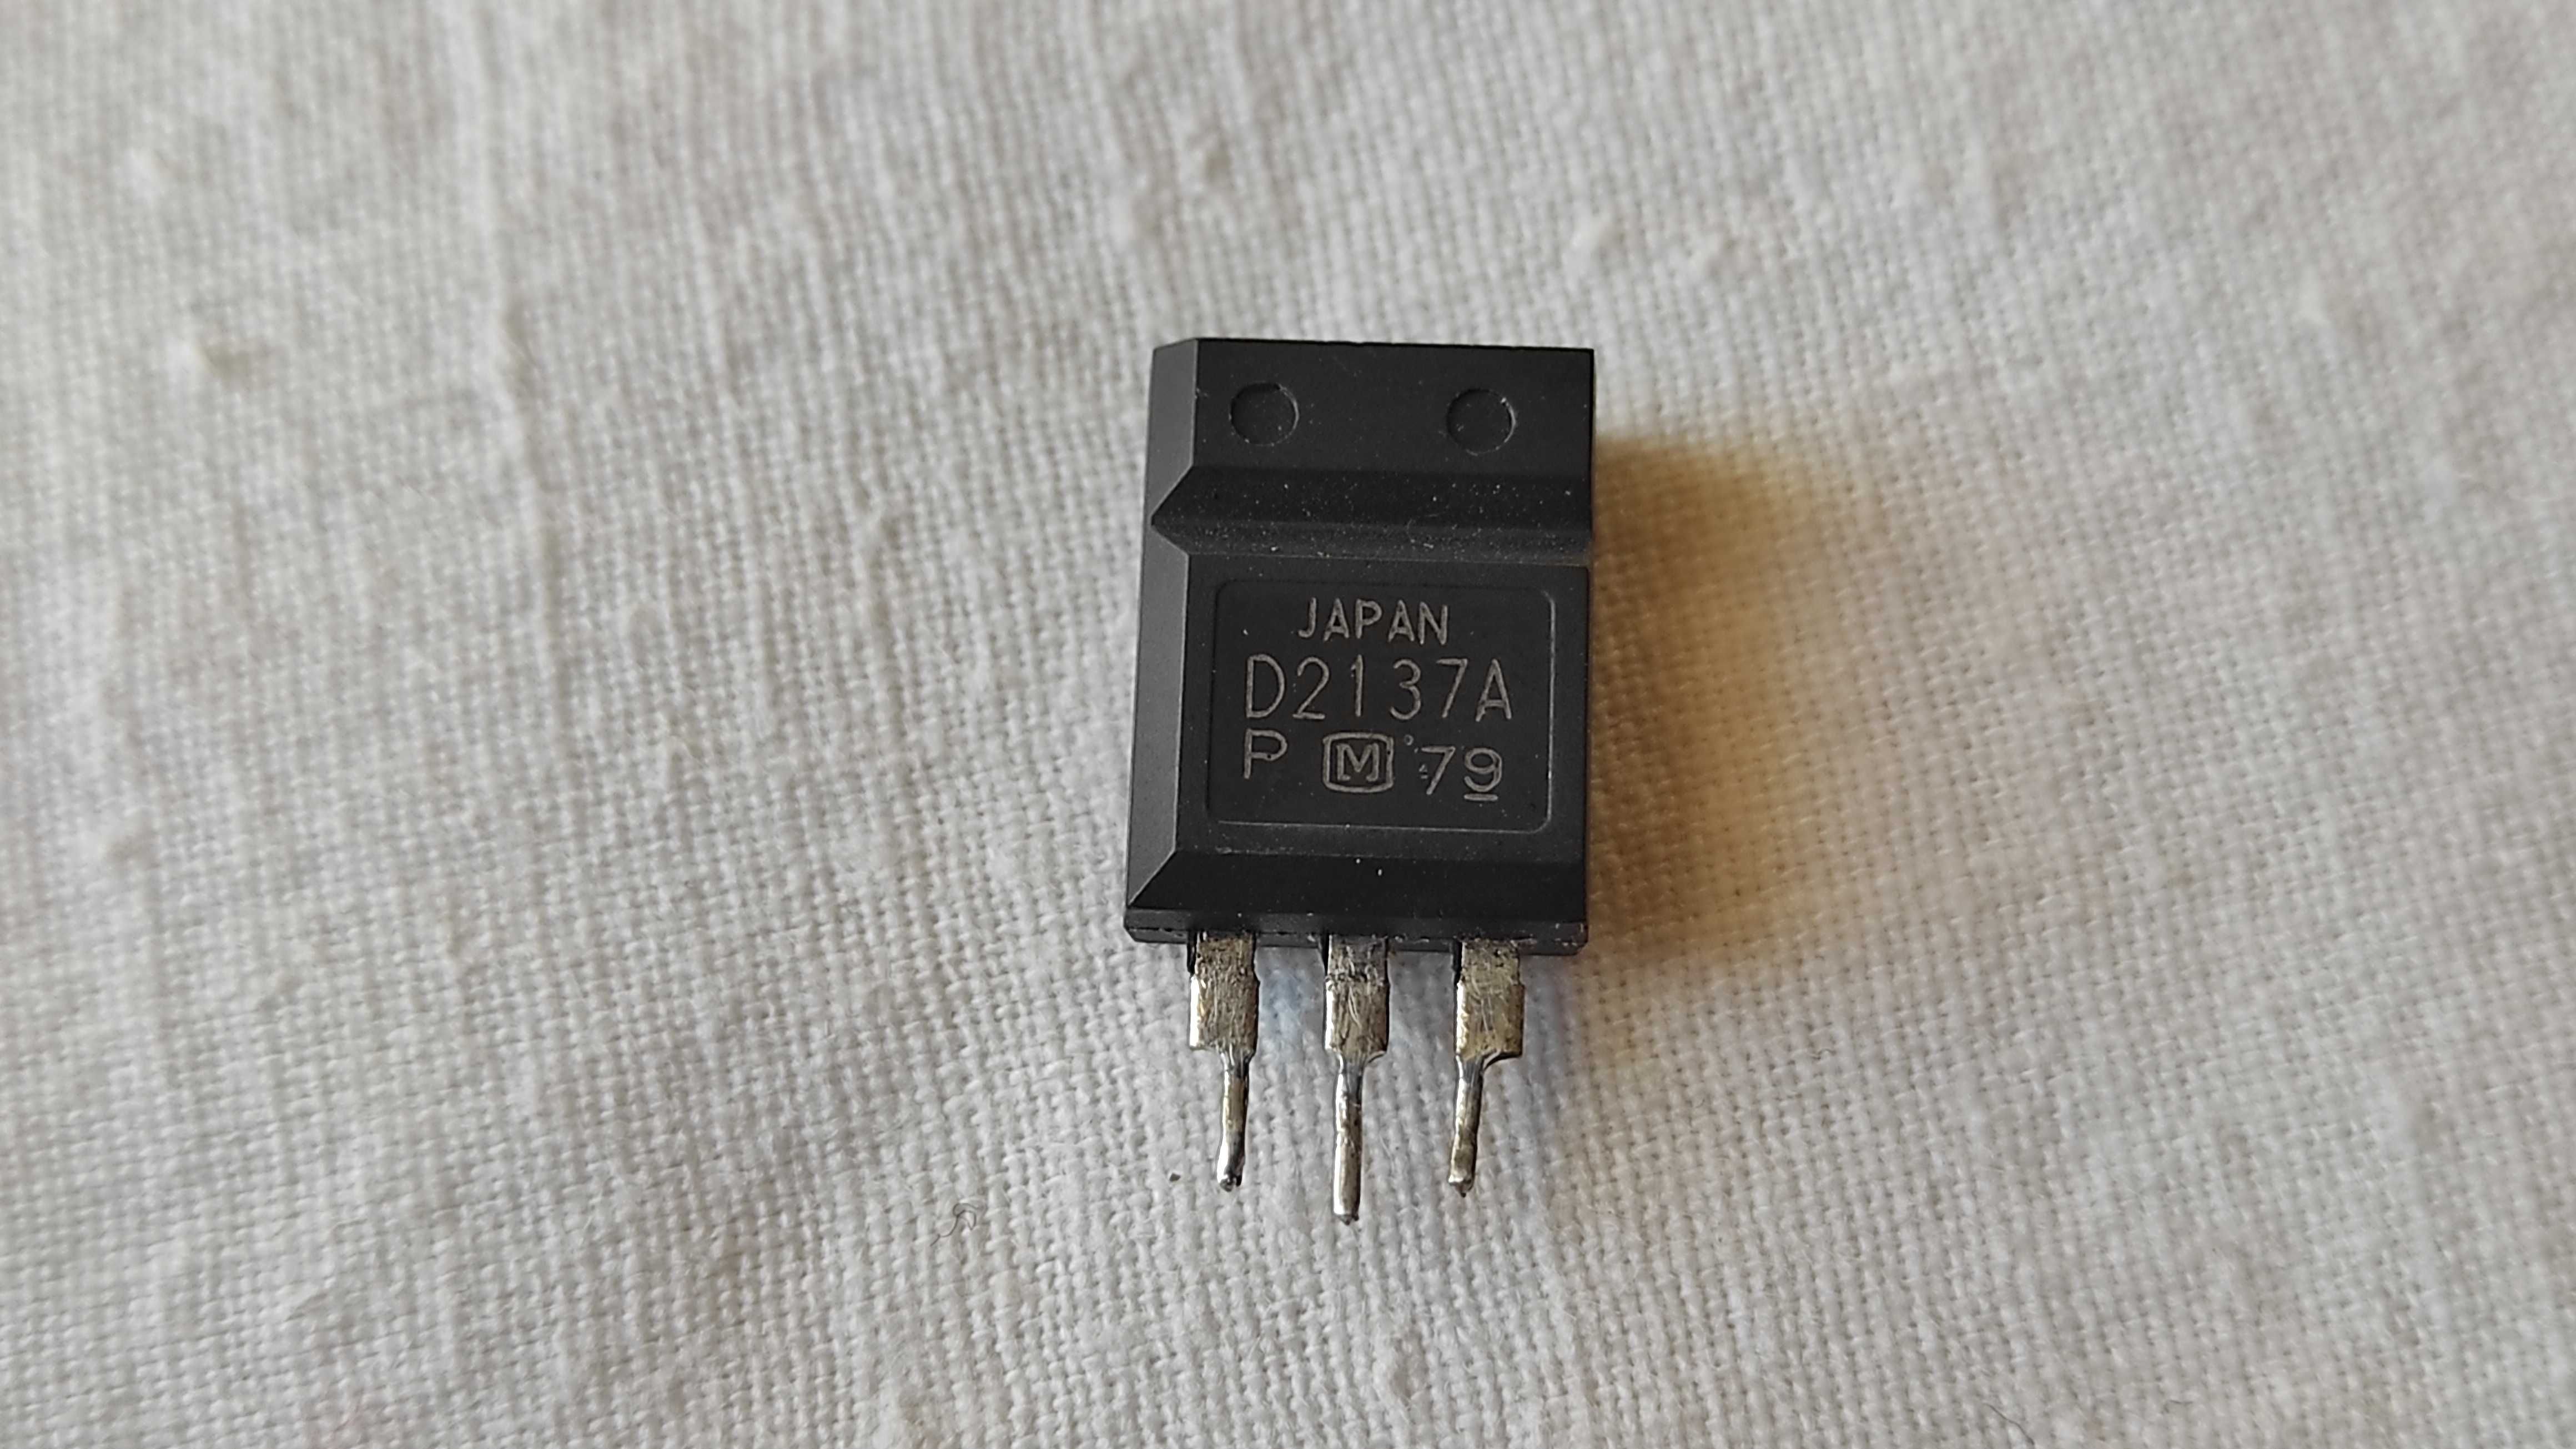 Транзистор D2137A Japan P (M) 79